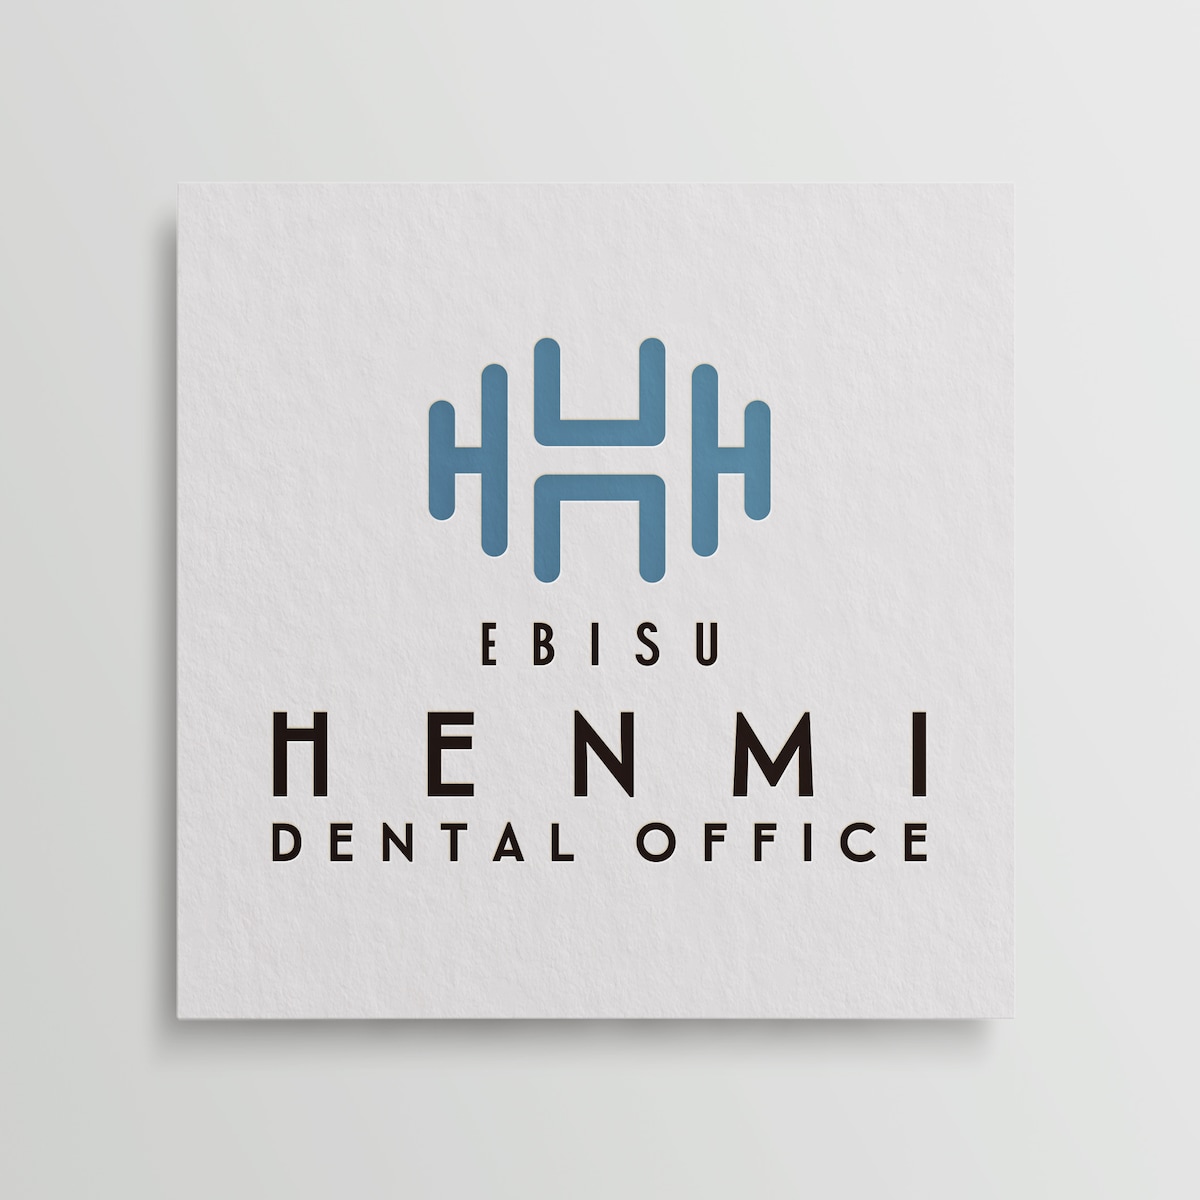 HENMI DENTAL OFFICE